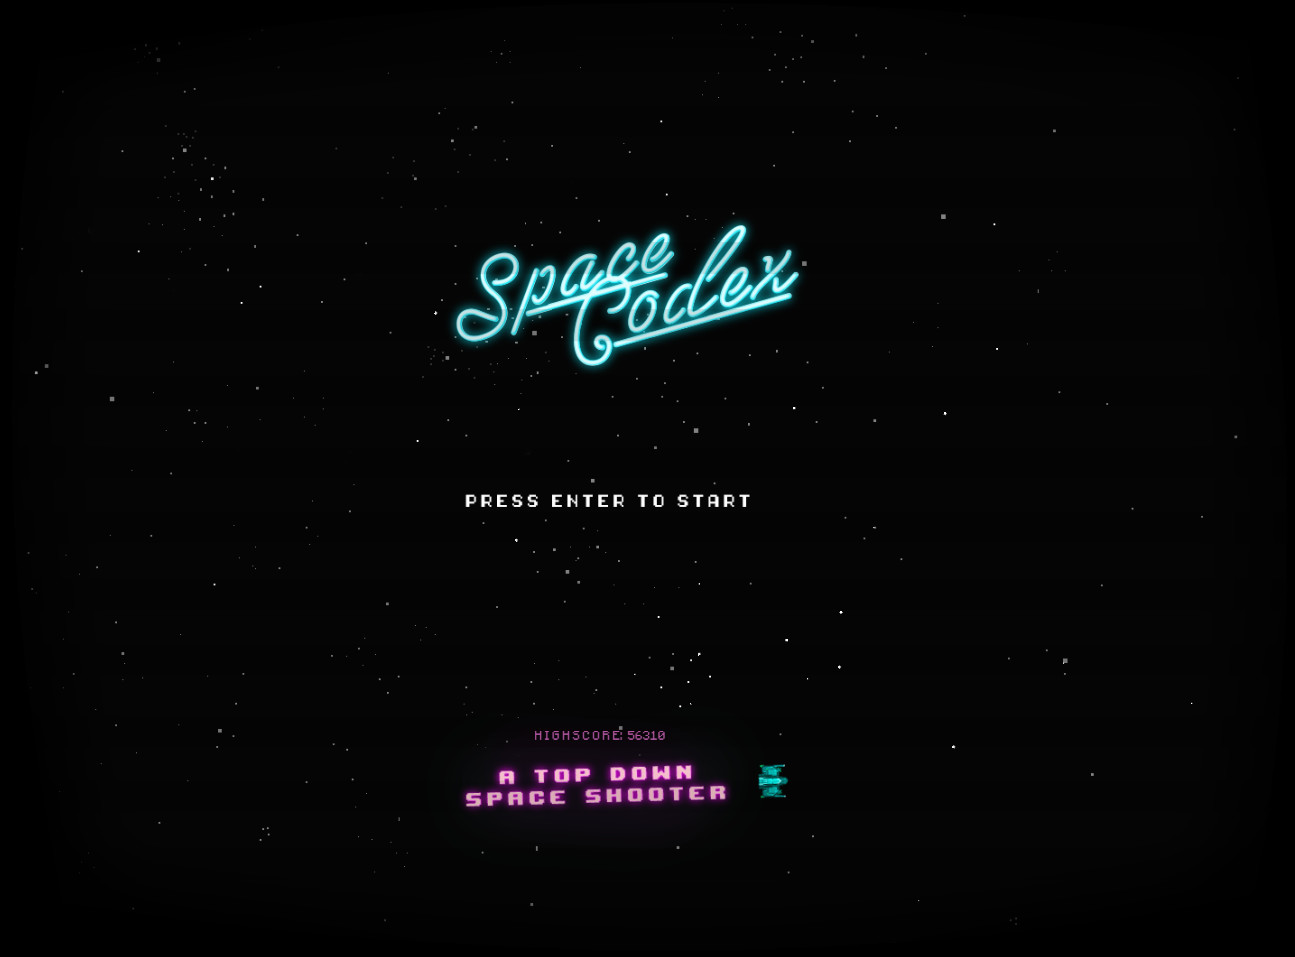 Space Codex screenshot